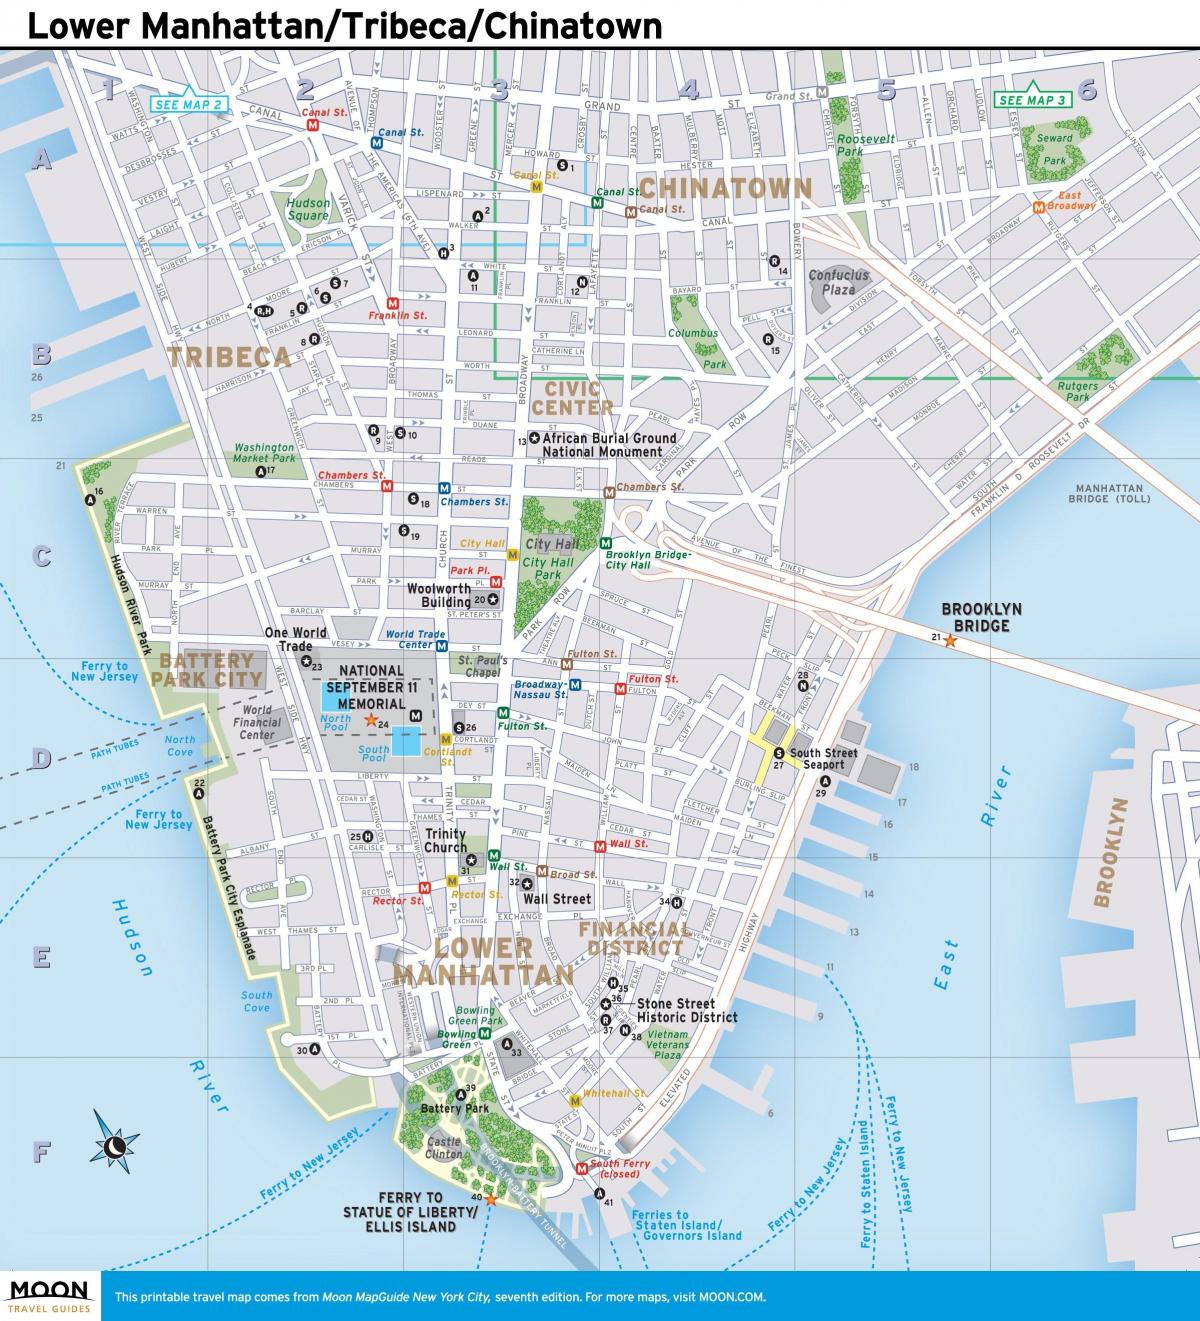 mapa de la part baixa de Manhattan de nova york